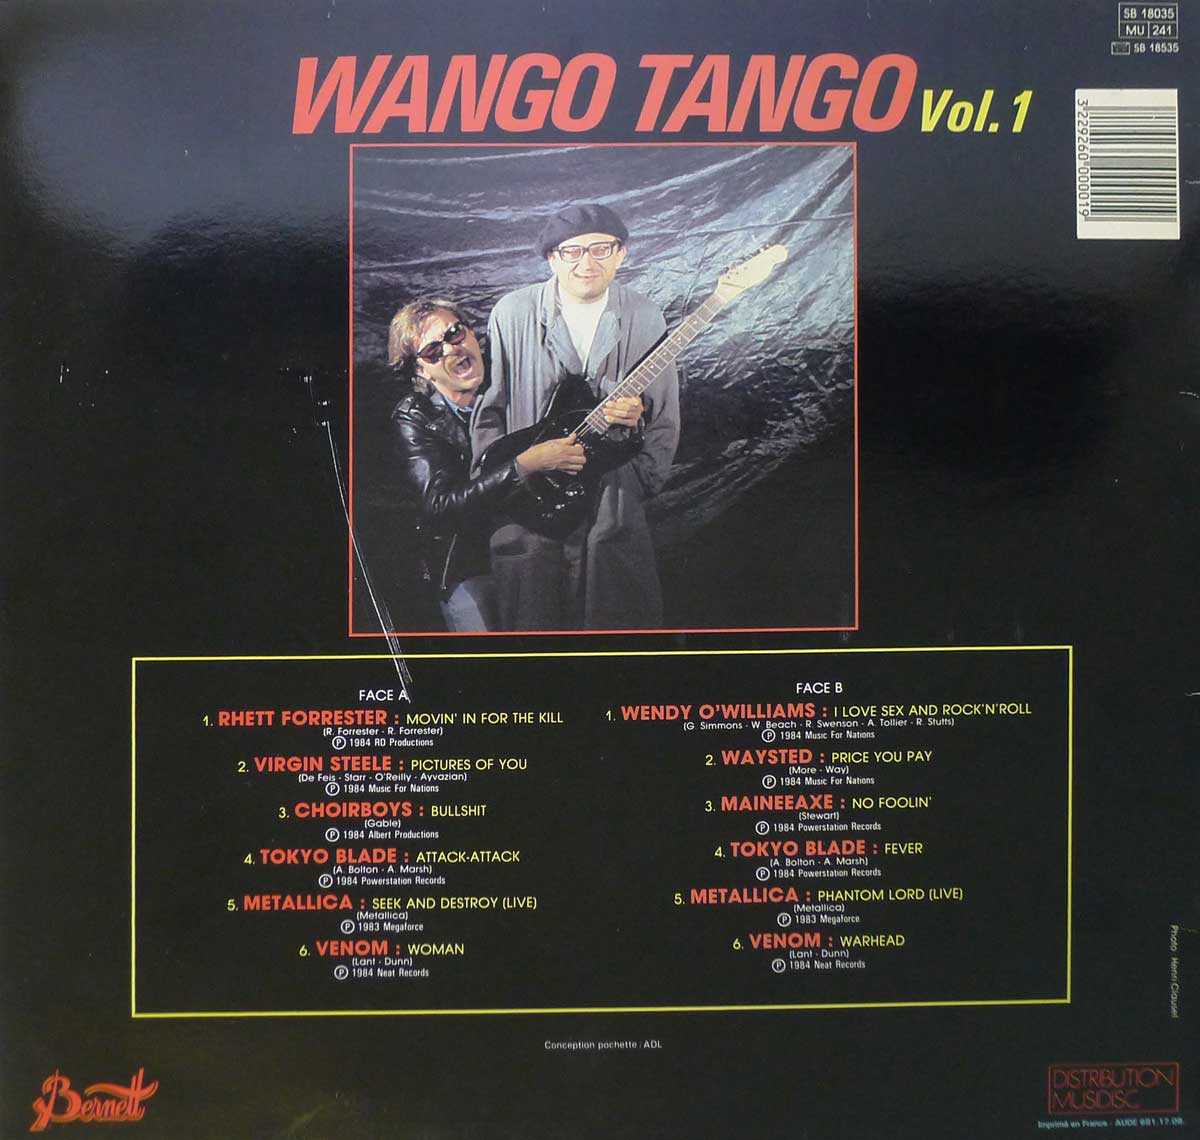 Album Back Cover  Photo of "Wango Tango Vol 1."